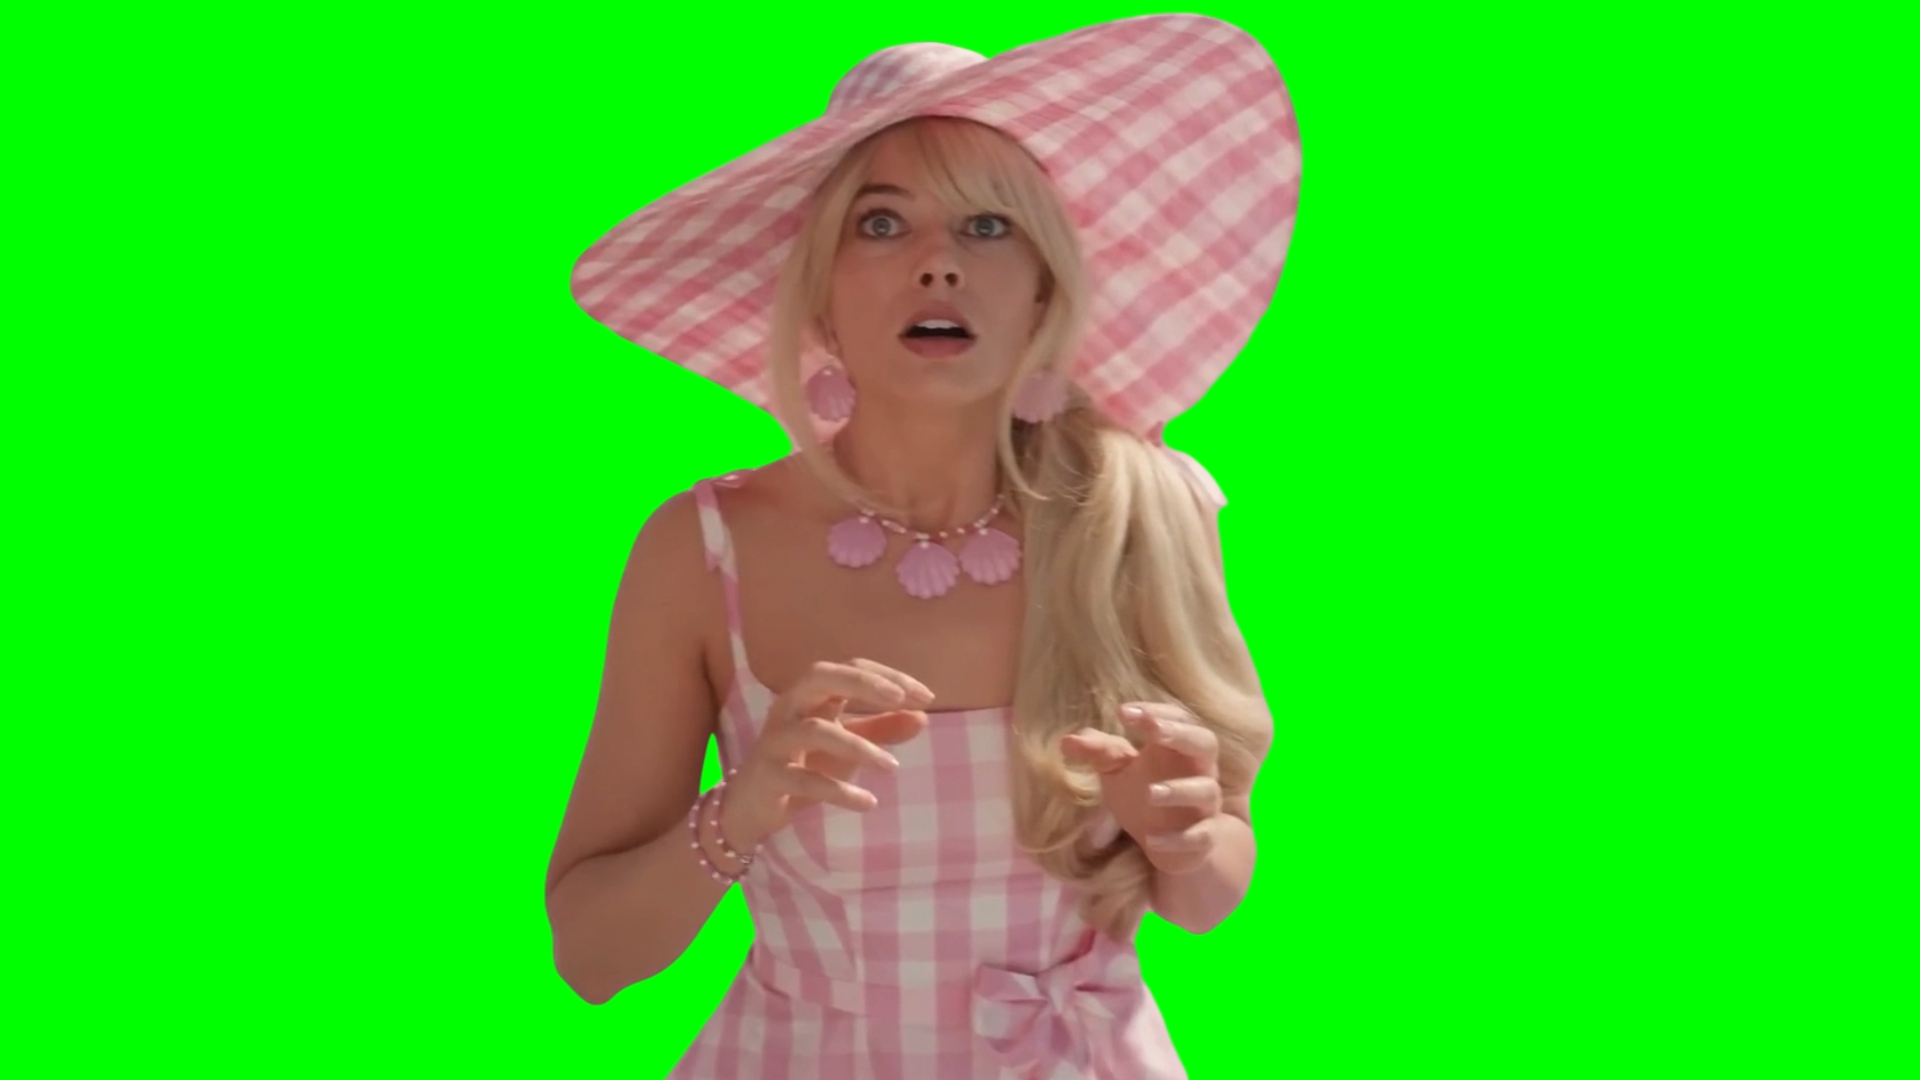 Ken flying meme - Barbie 2023 movie (Green Screen)